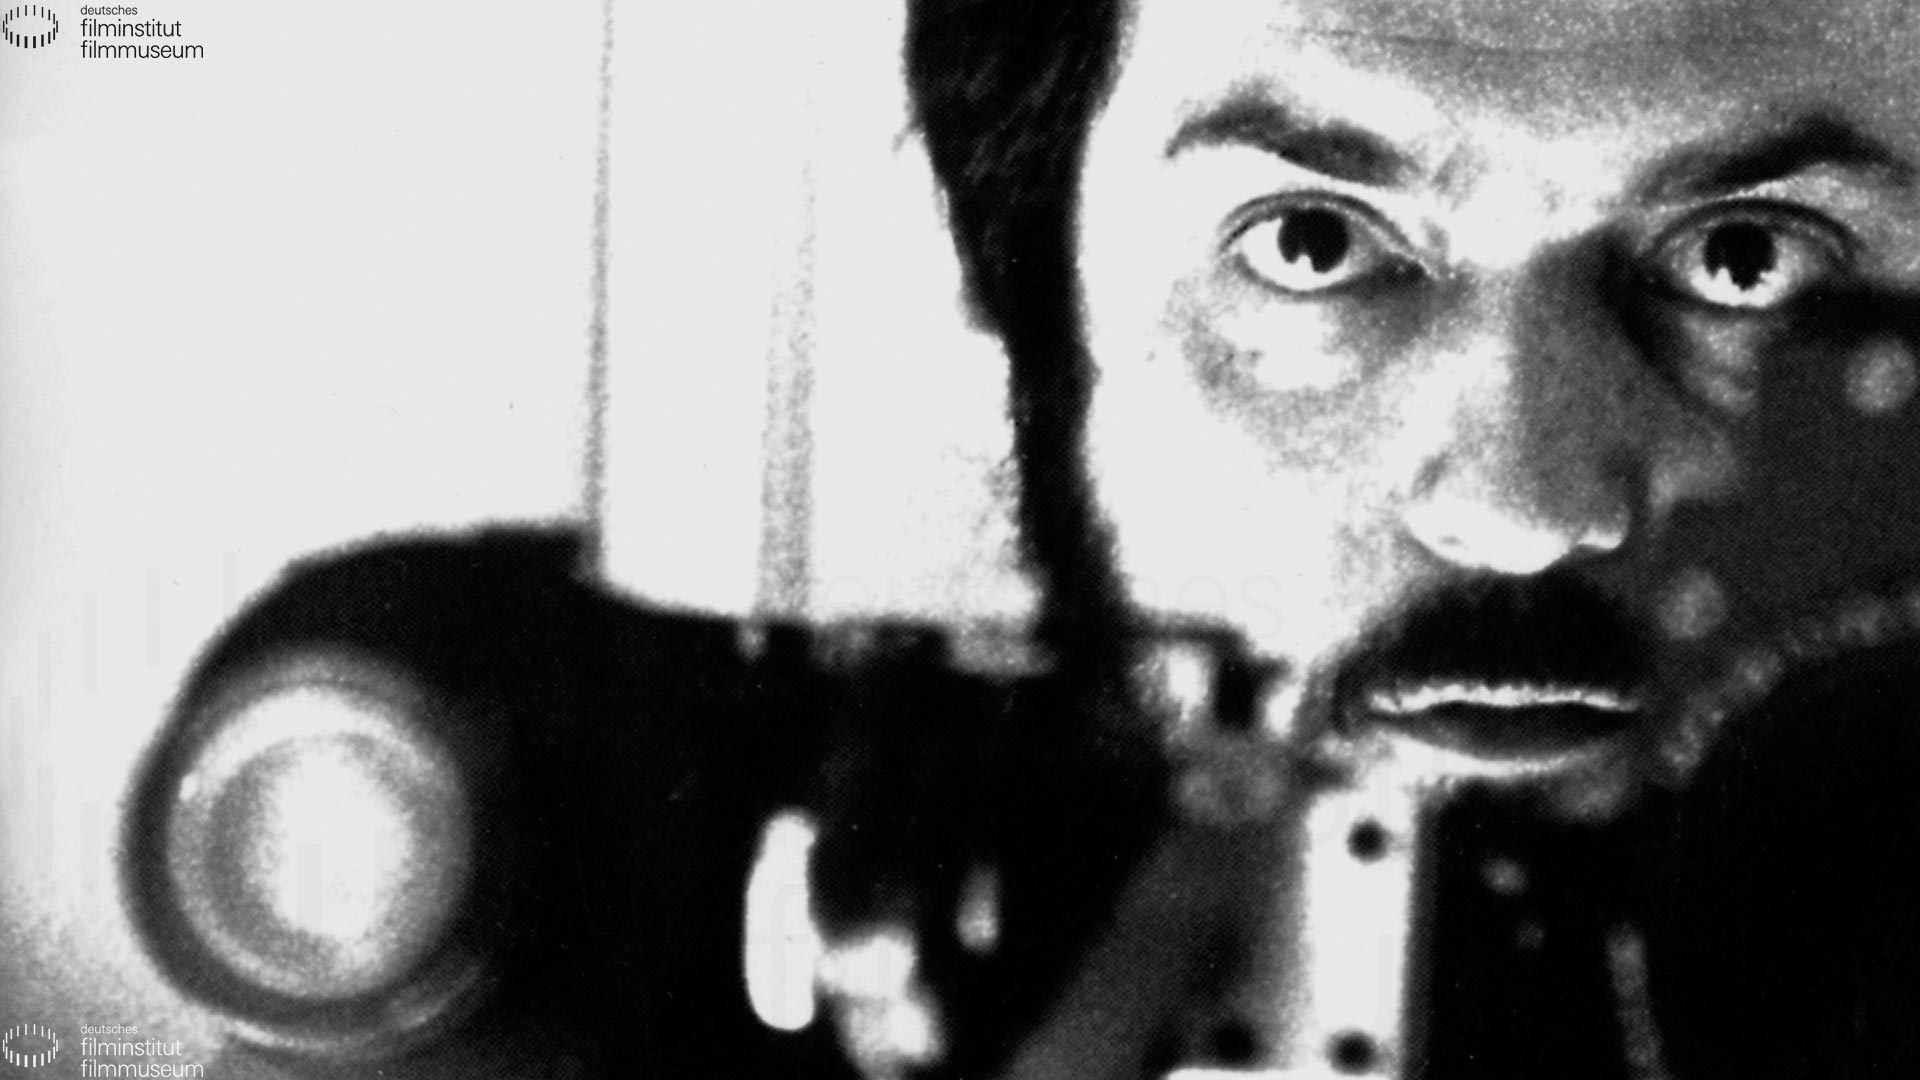 Biography – Stanley Kubrick